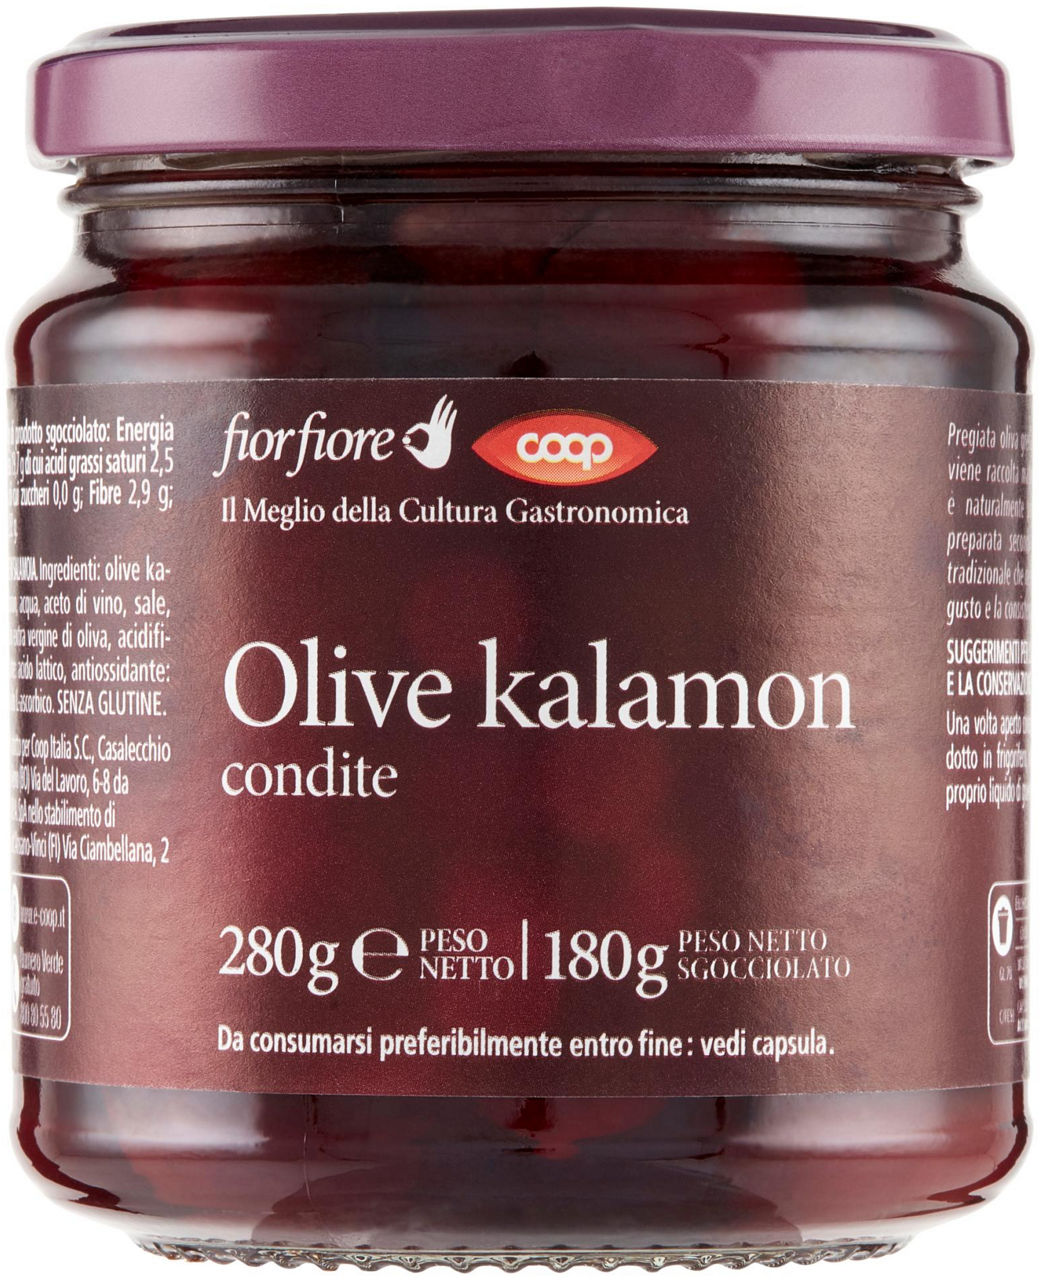 Olive kalamon condite  coop fior fiore in salamoia vaso vetro gr.180